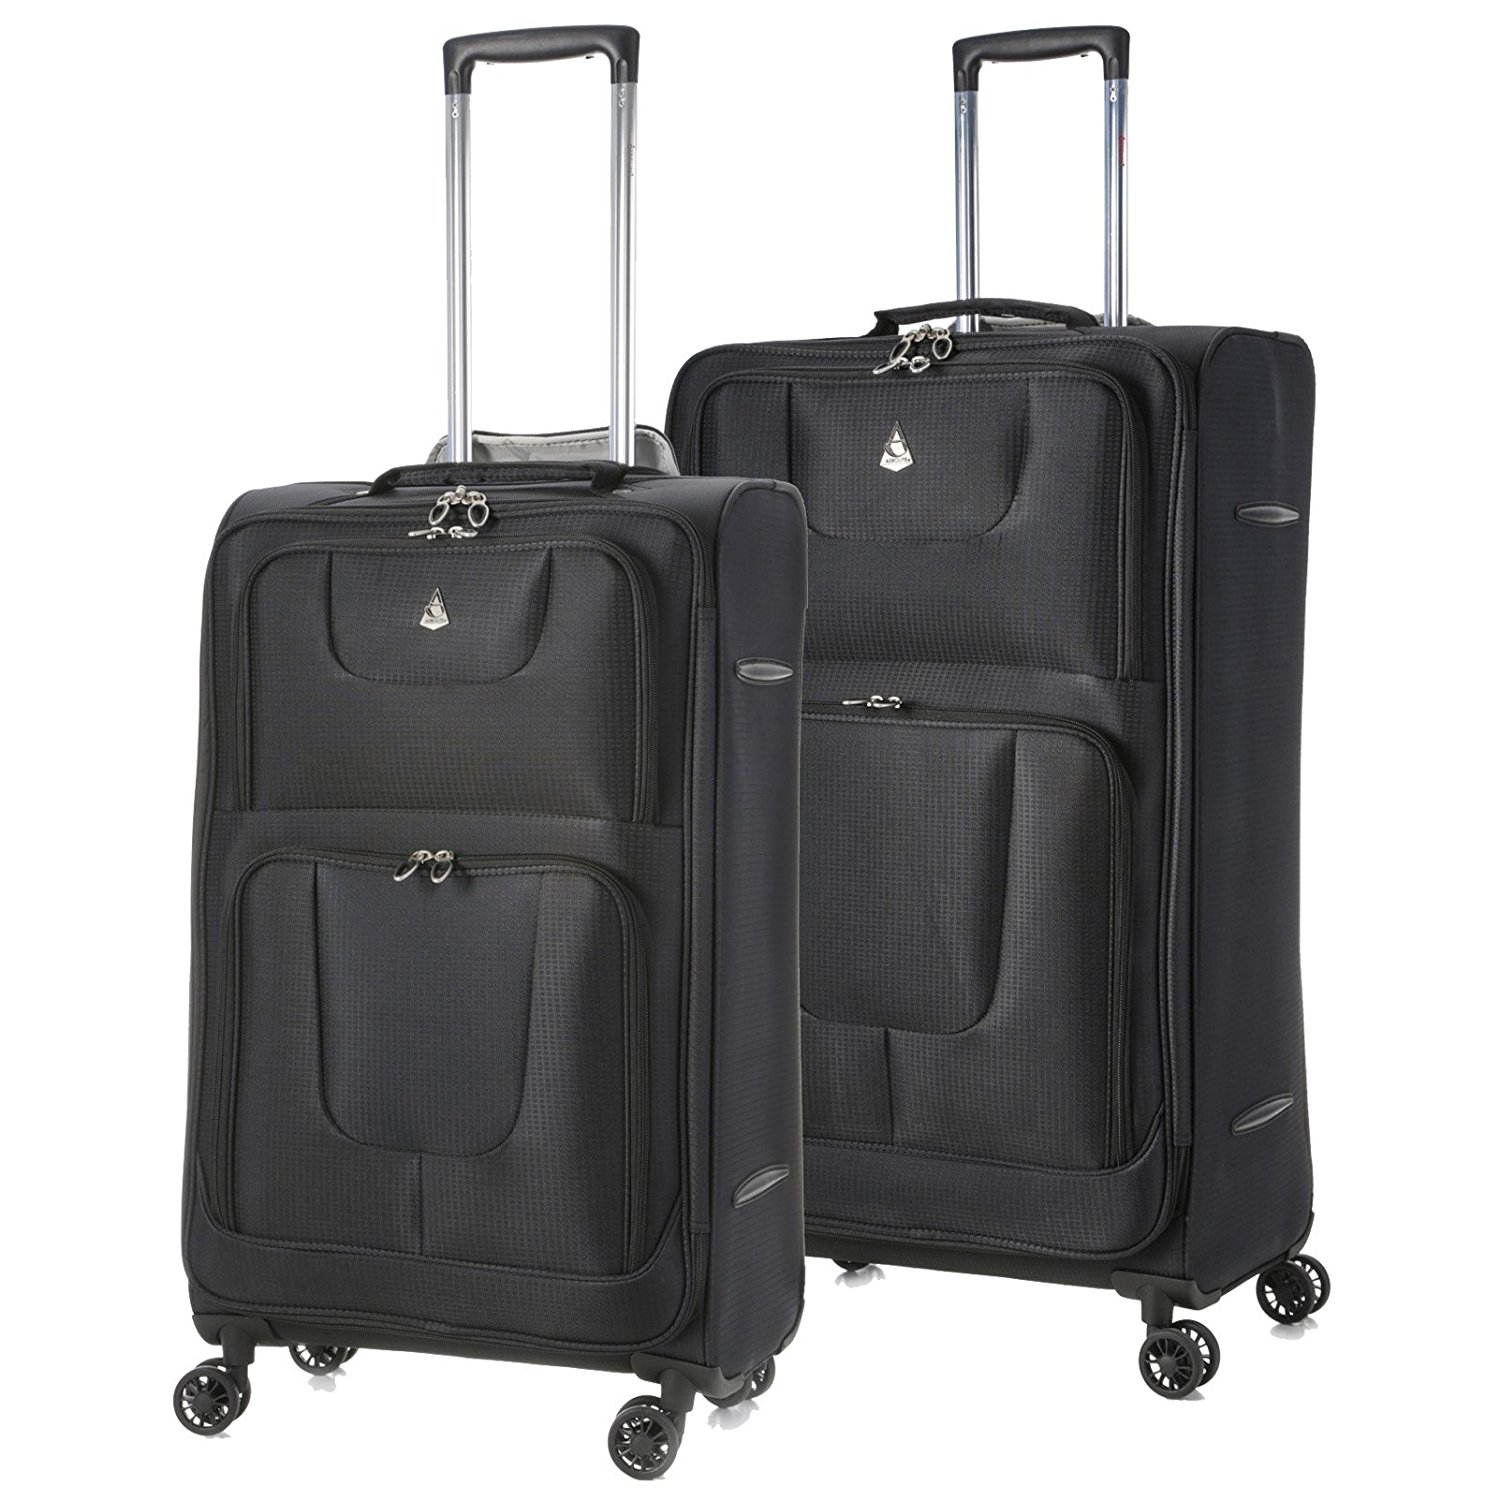 Aerolite Super Lightweight 8 Wheel Spinner Suitcases Cases - Set of 2